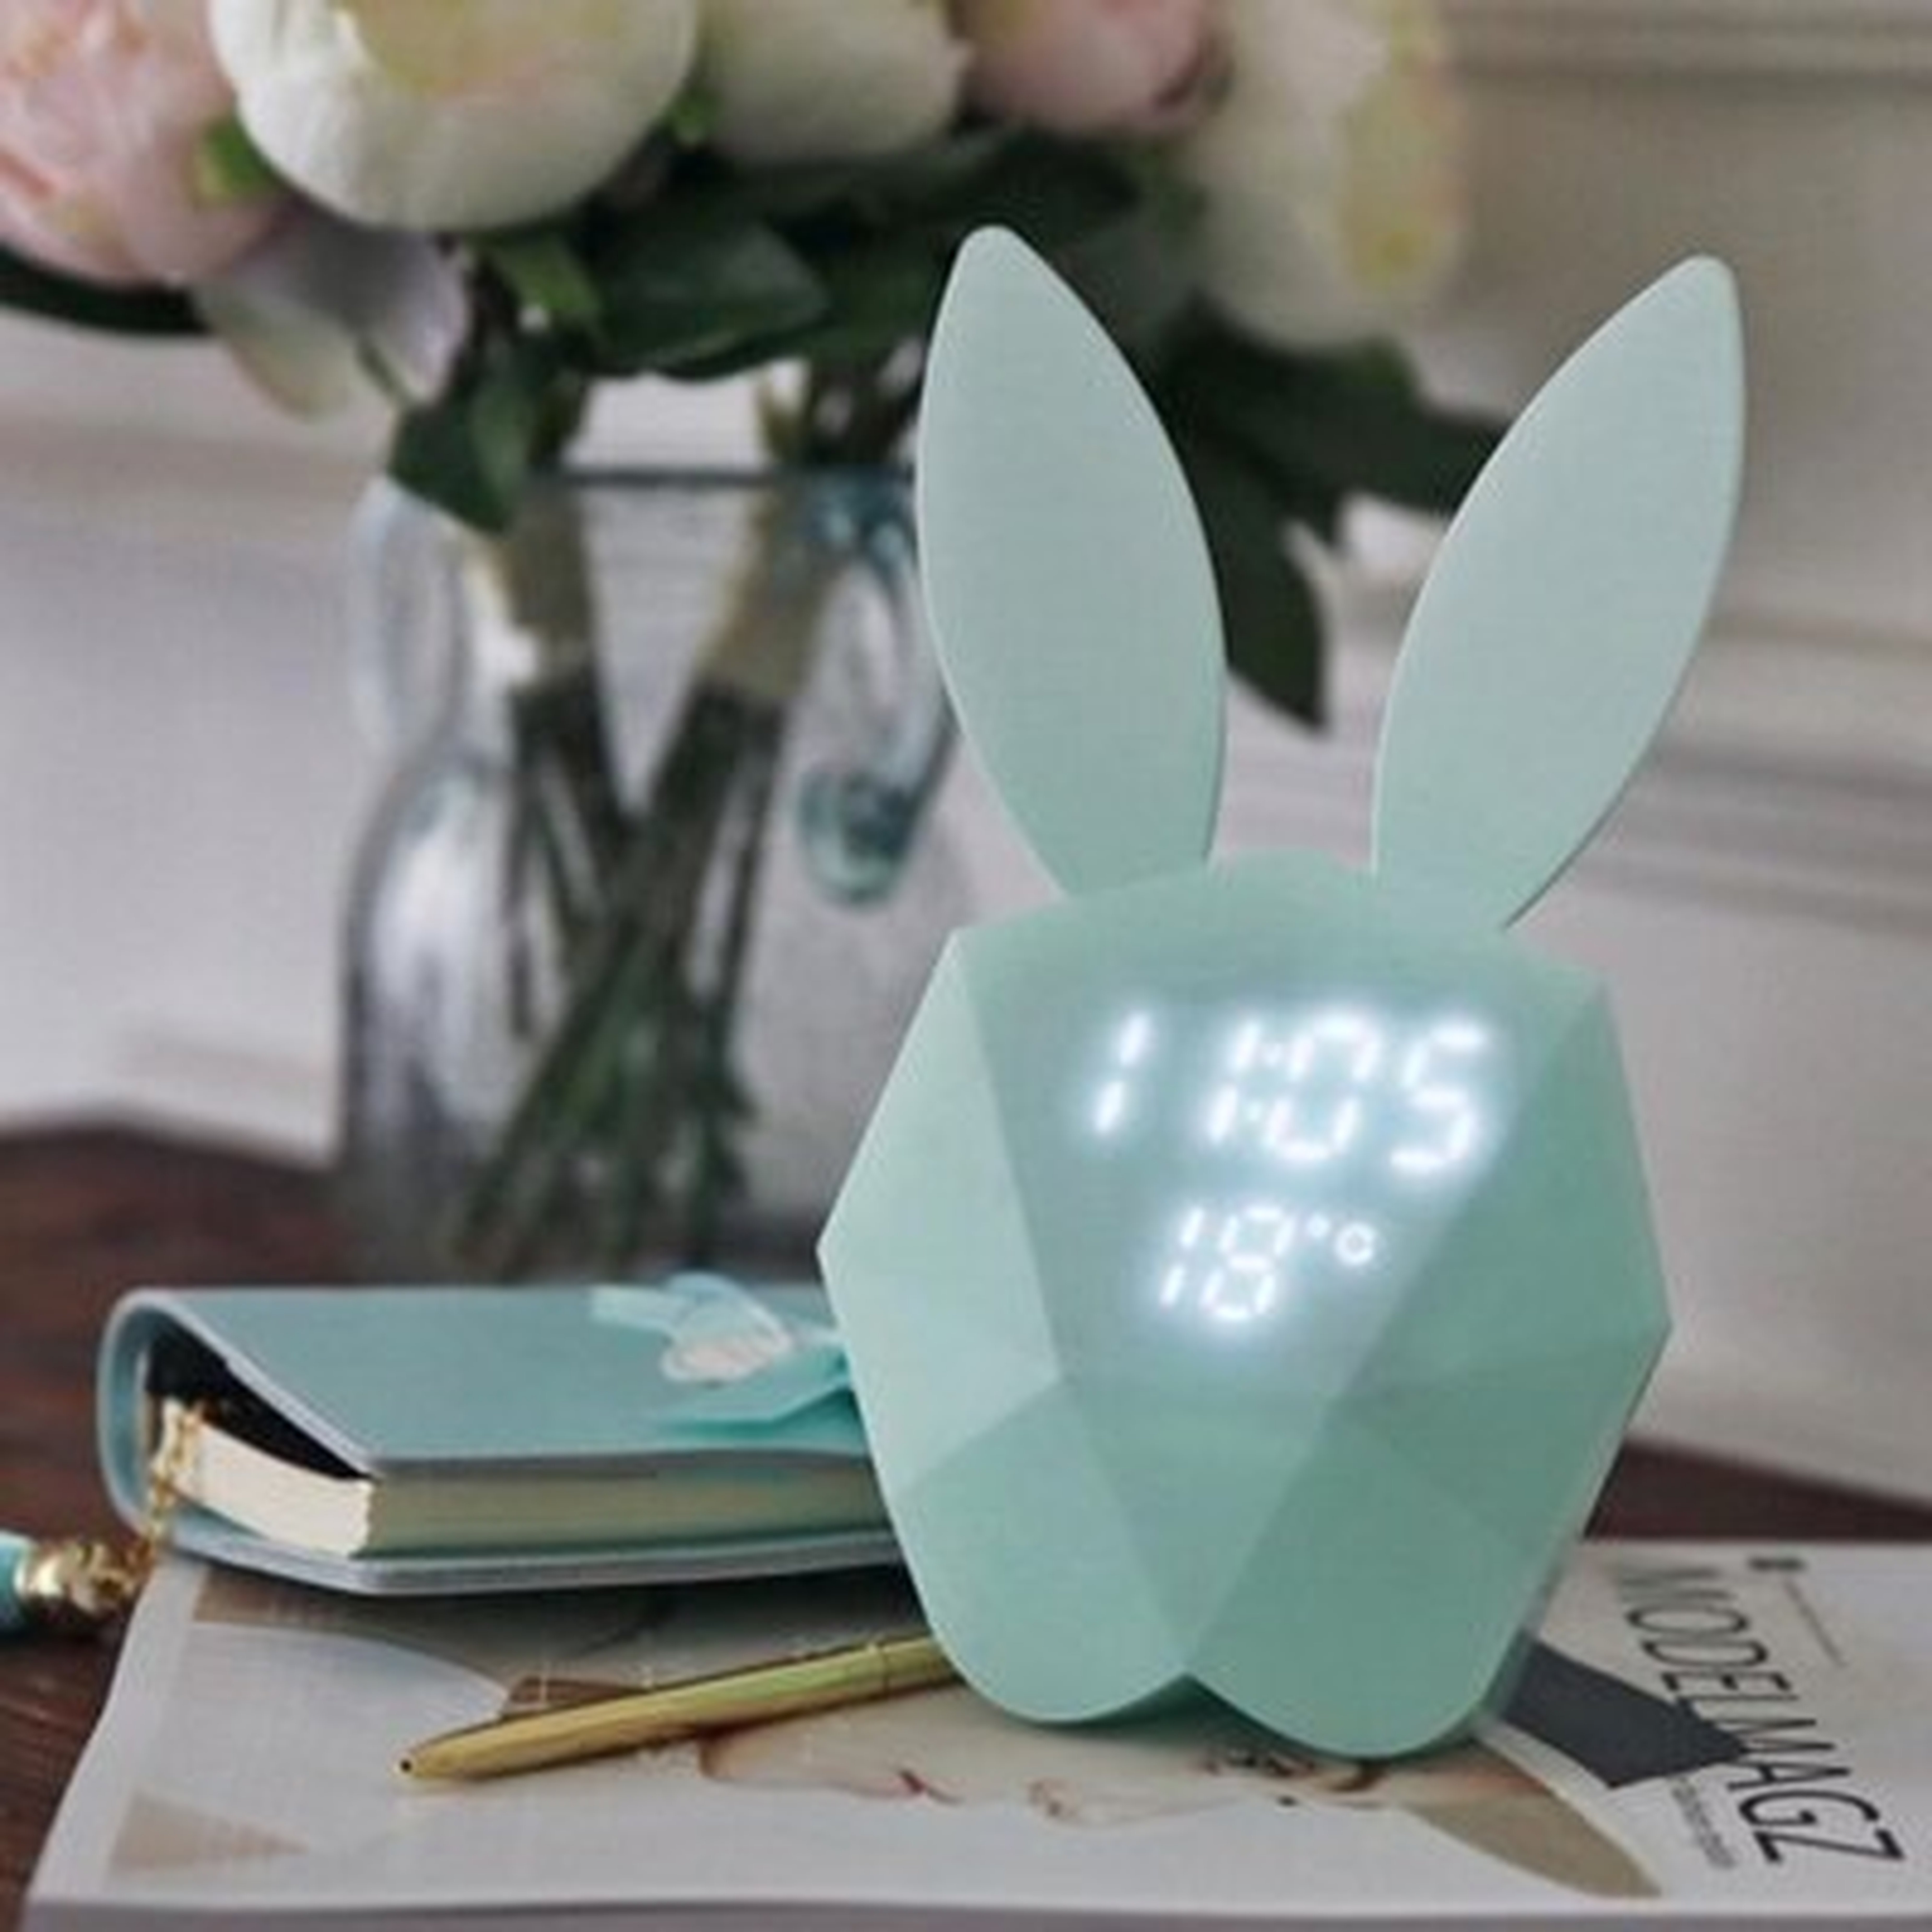 Cute Rabbit Digital Alarm Clock Night Light Table Clock Rechargeable - Wayfair